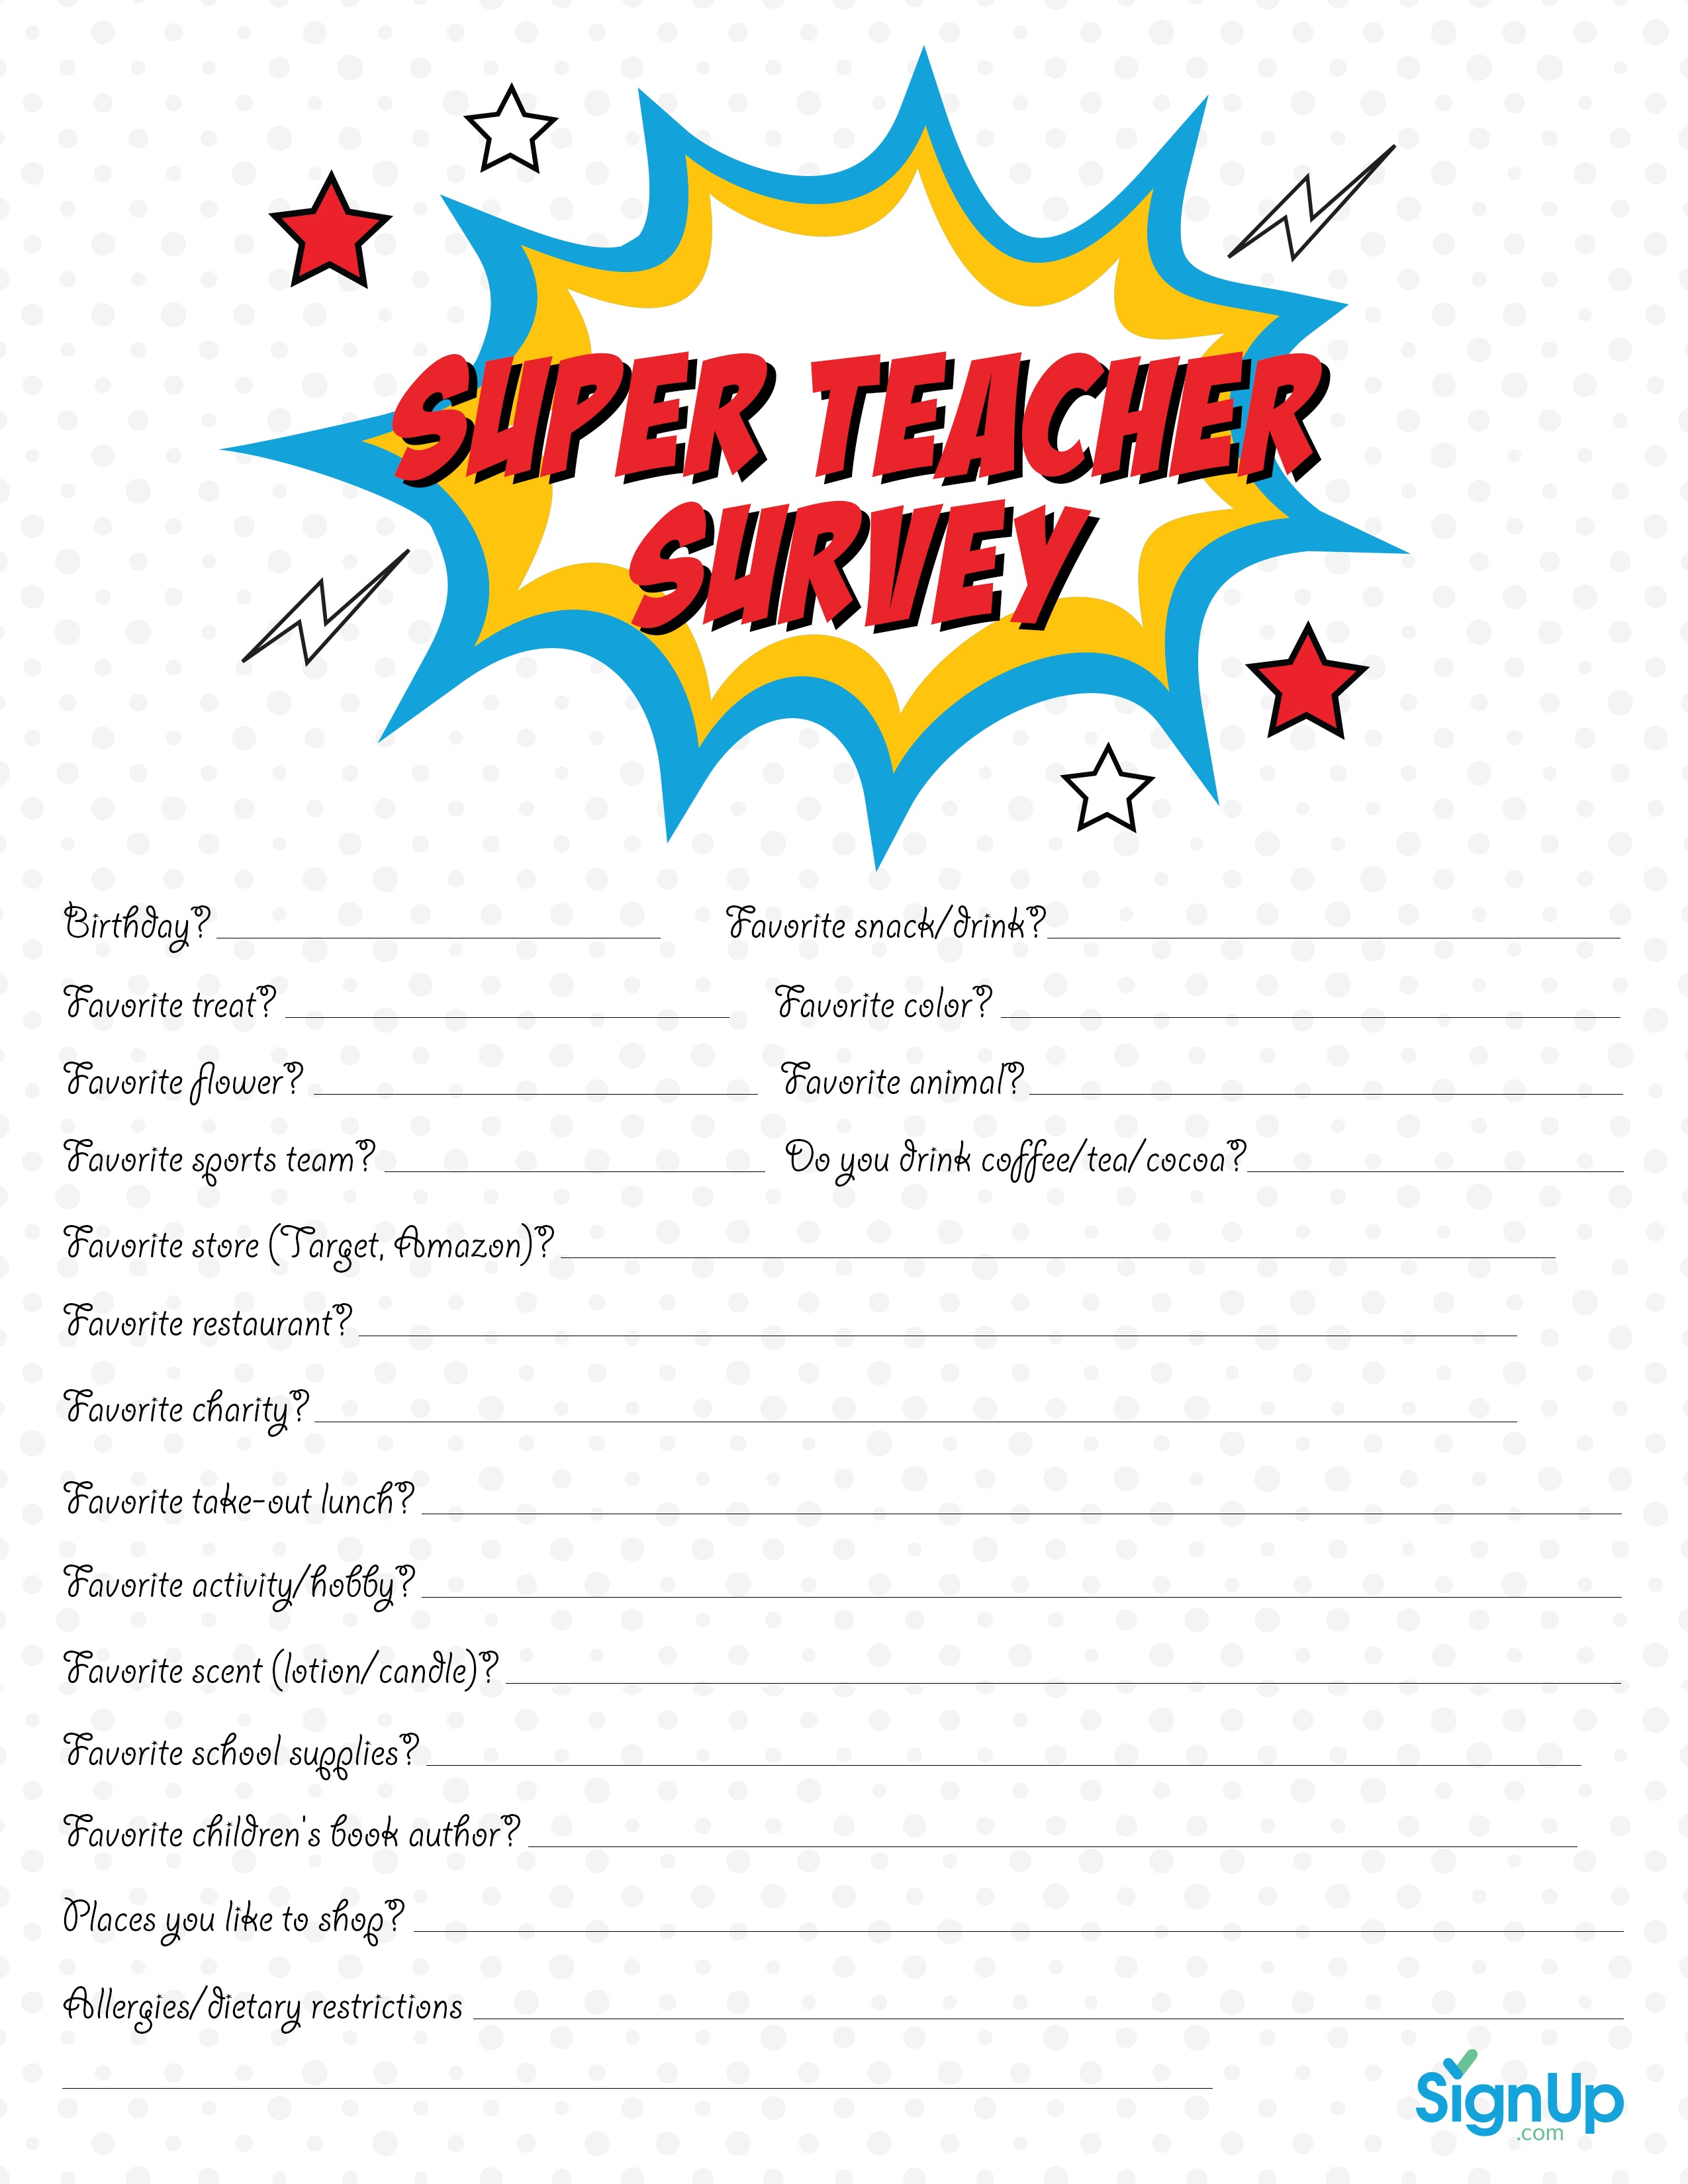 Teacher Survey: Free Downloadable Room Parent Resource | Signup - Make A Printable Survey Free